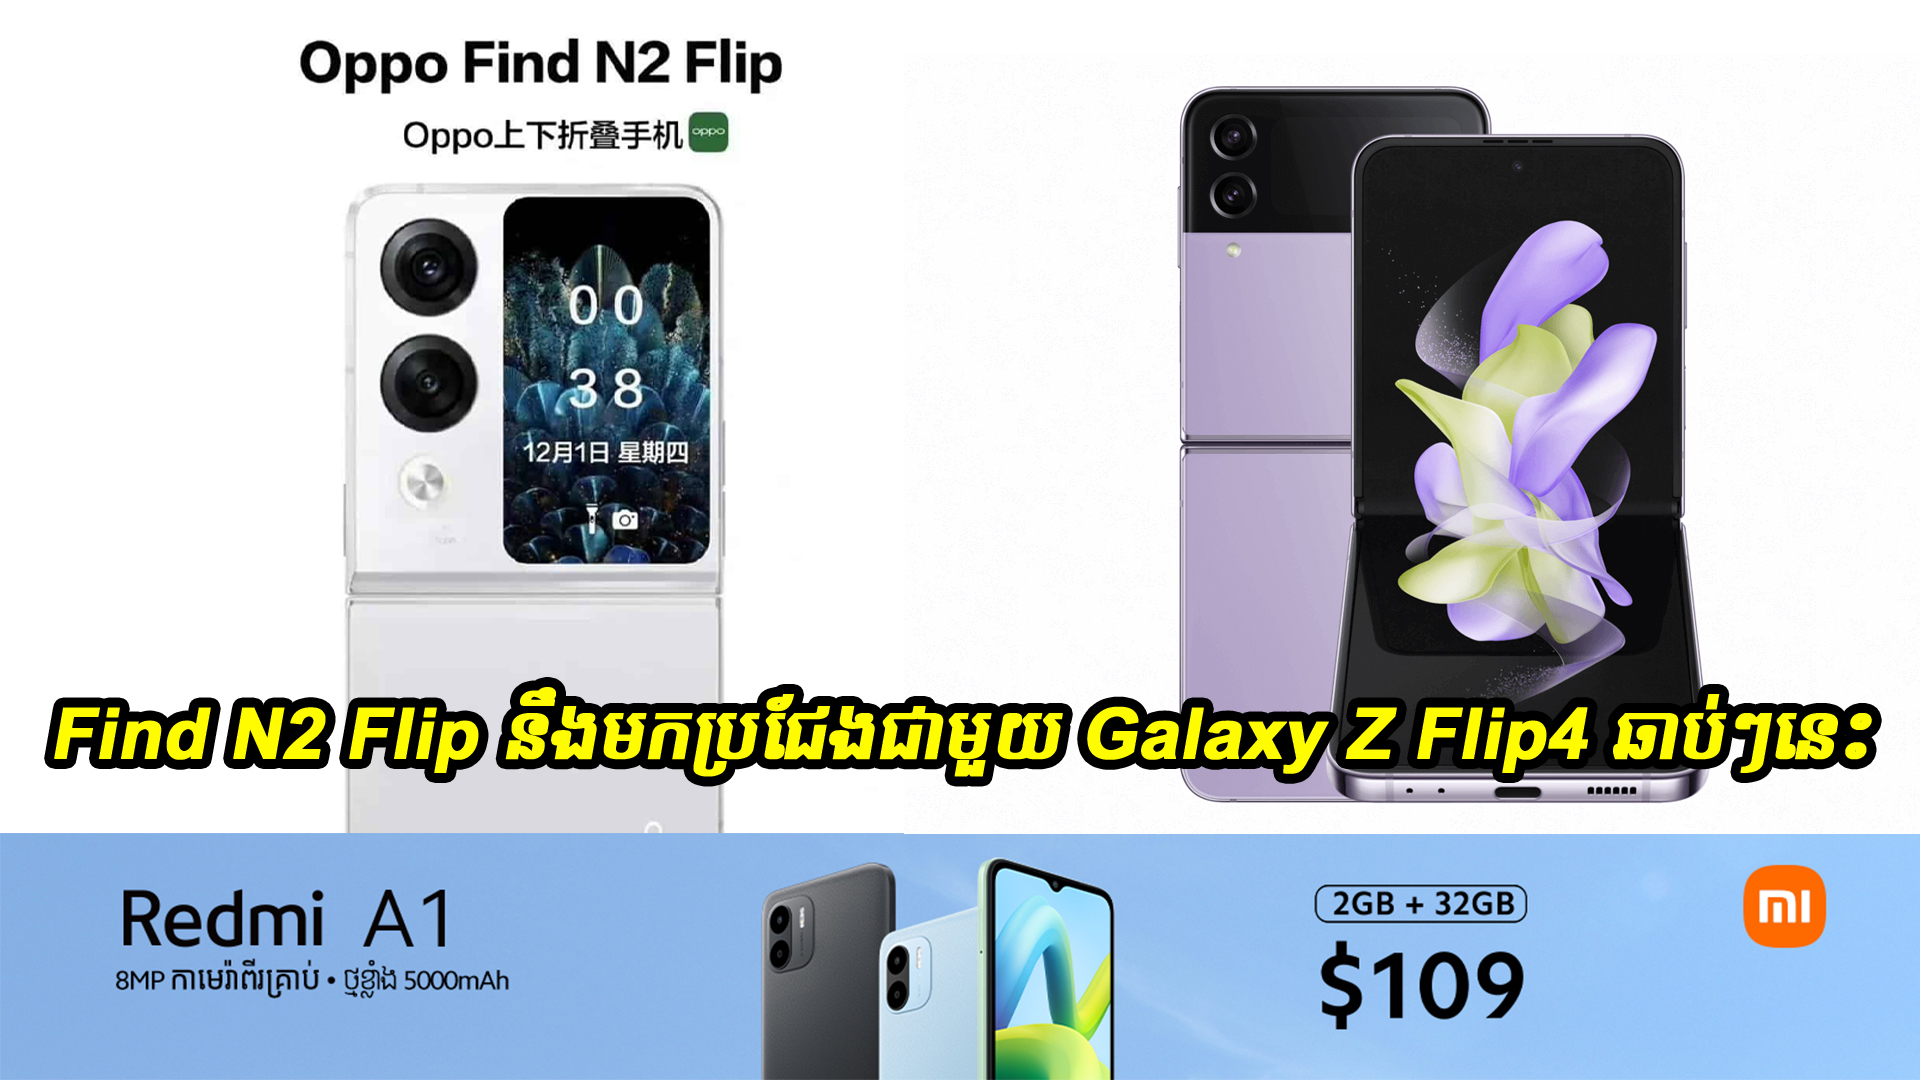 OPPO Find N2 Flip នឹងមកប្រជែងជាមួយស្មាតហ្វូនបត់បាន Samsung នៅលើទីផ្សារសកលឆាប់ៗនេះហើយ